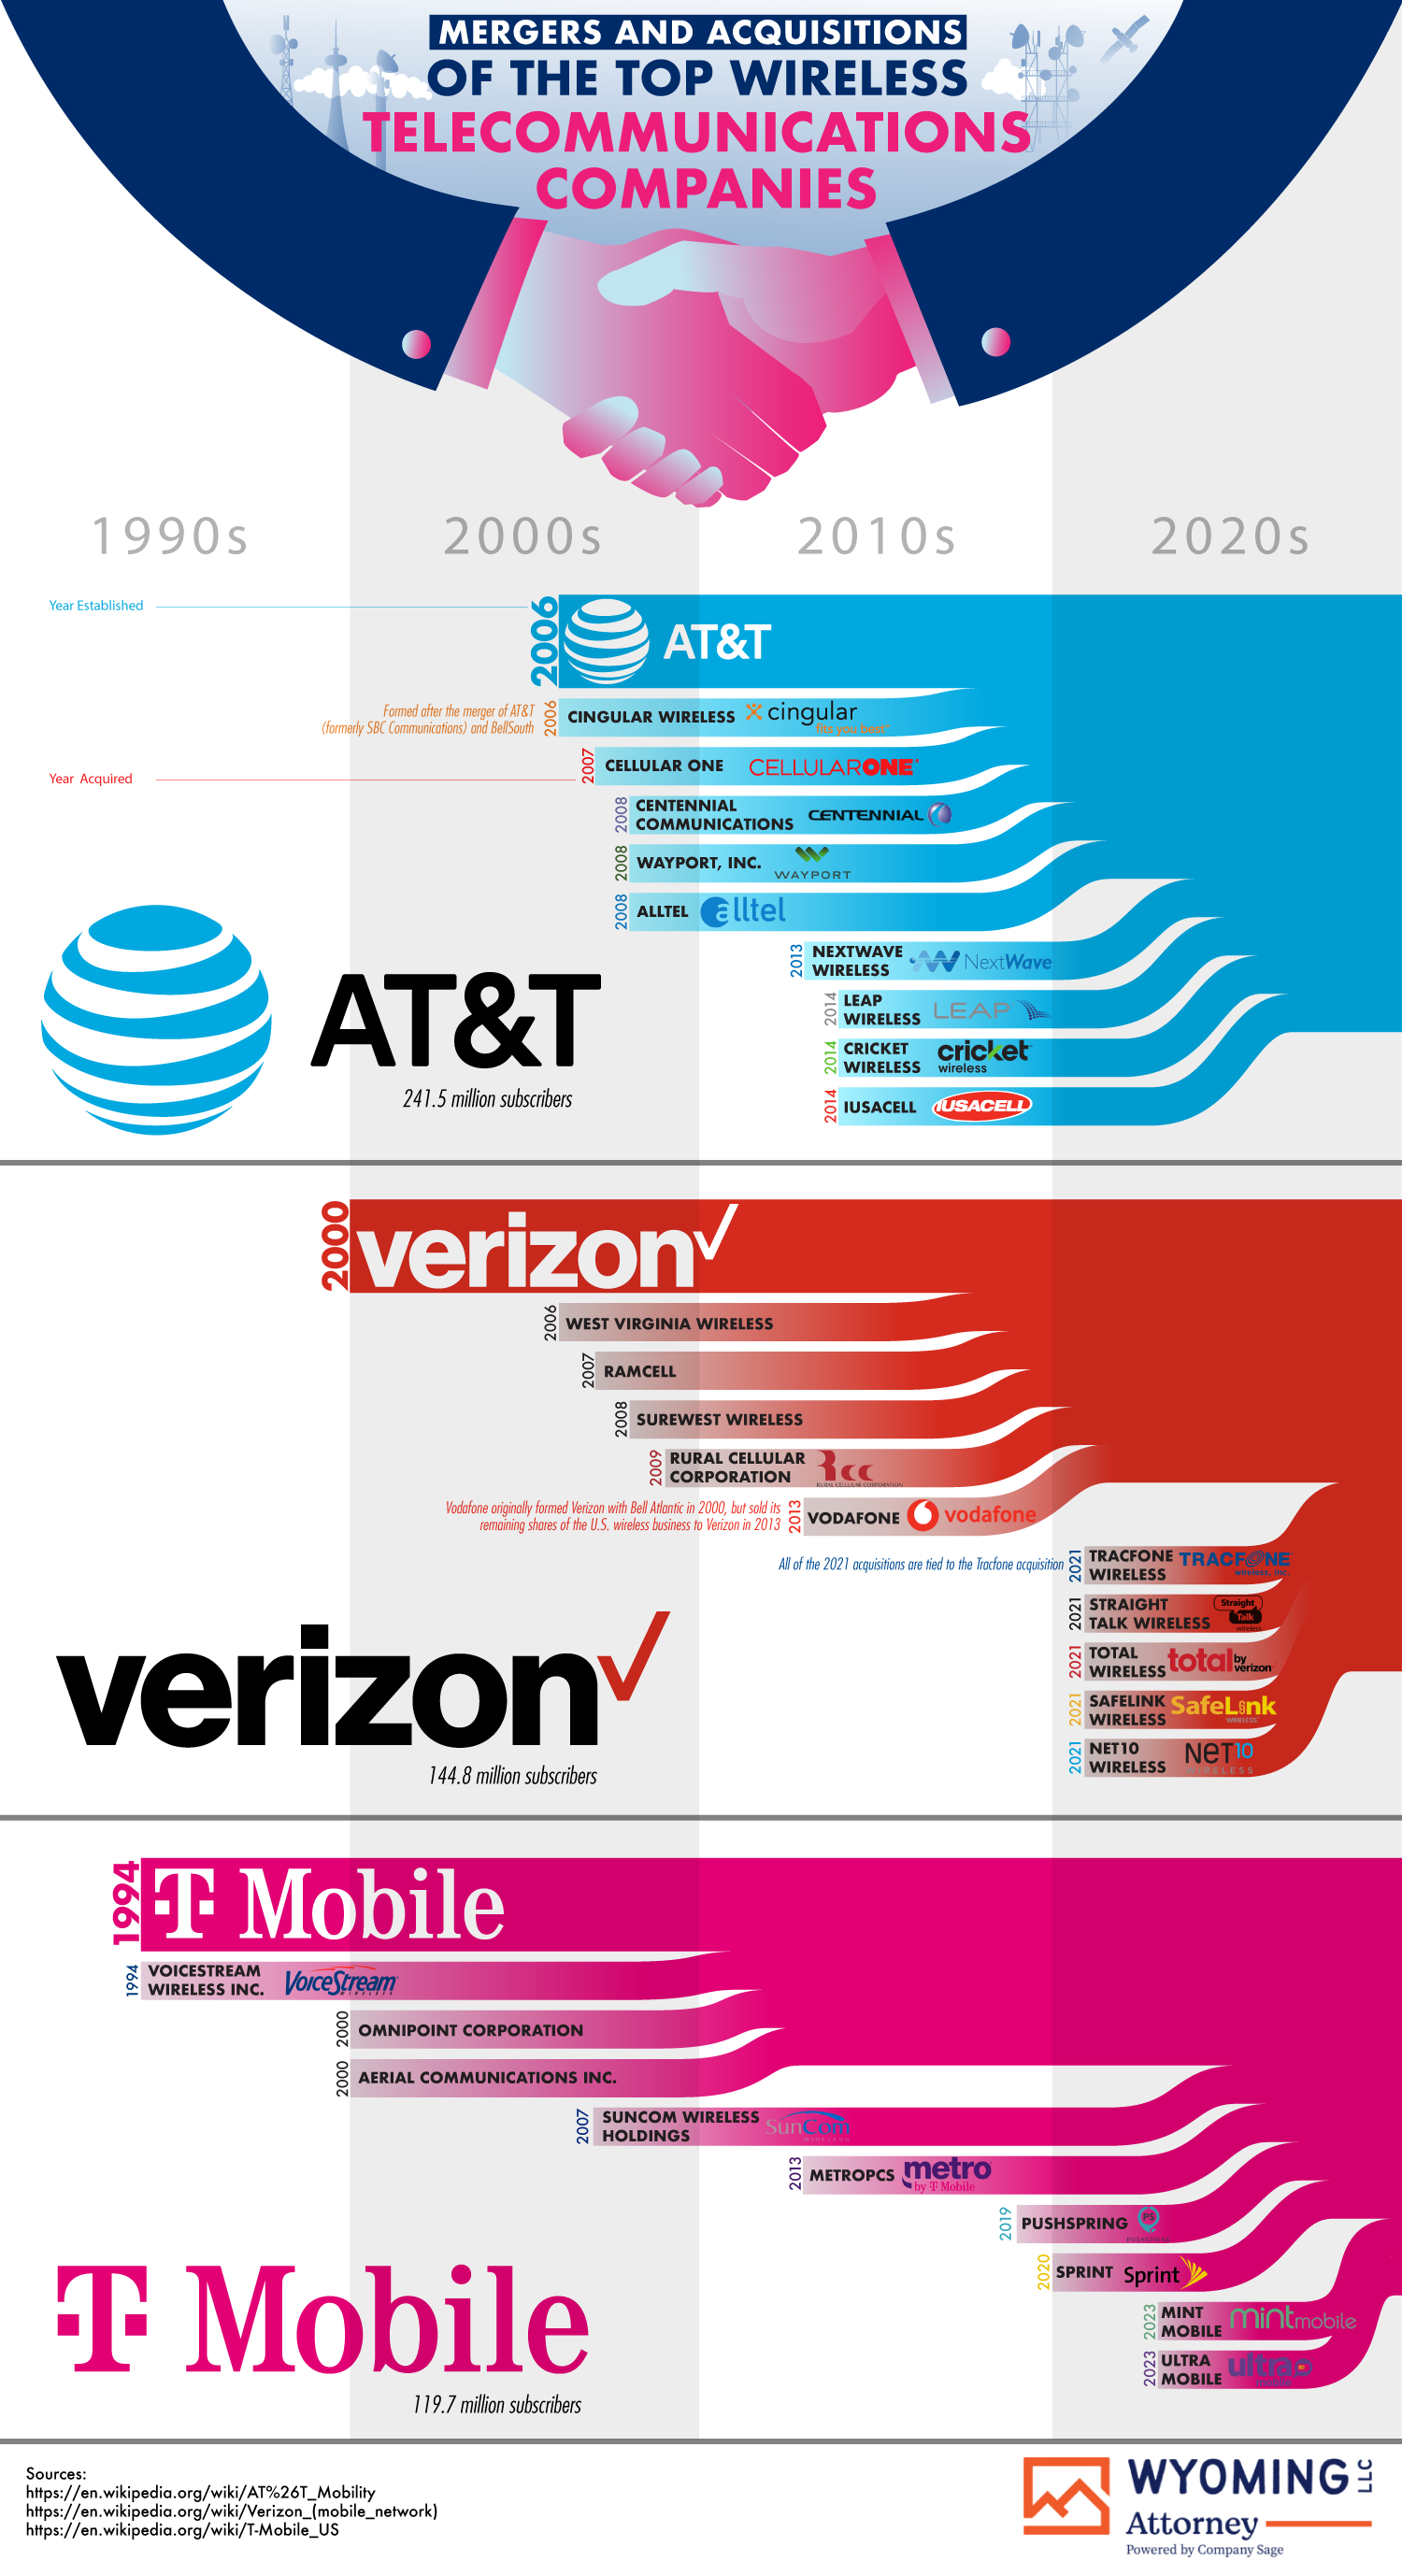 mergers-acquisitions-wireless-telecom-companies